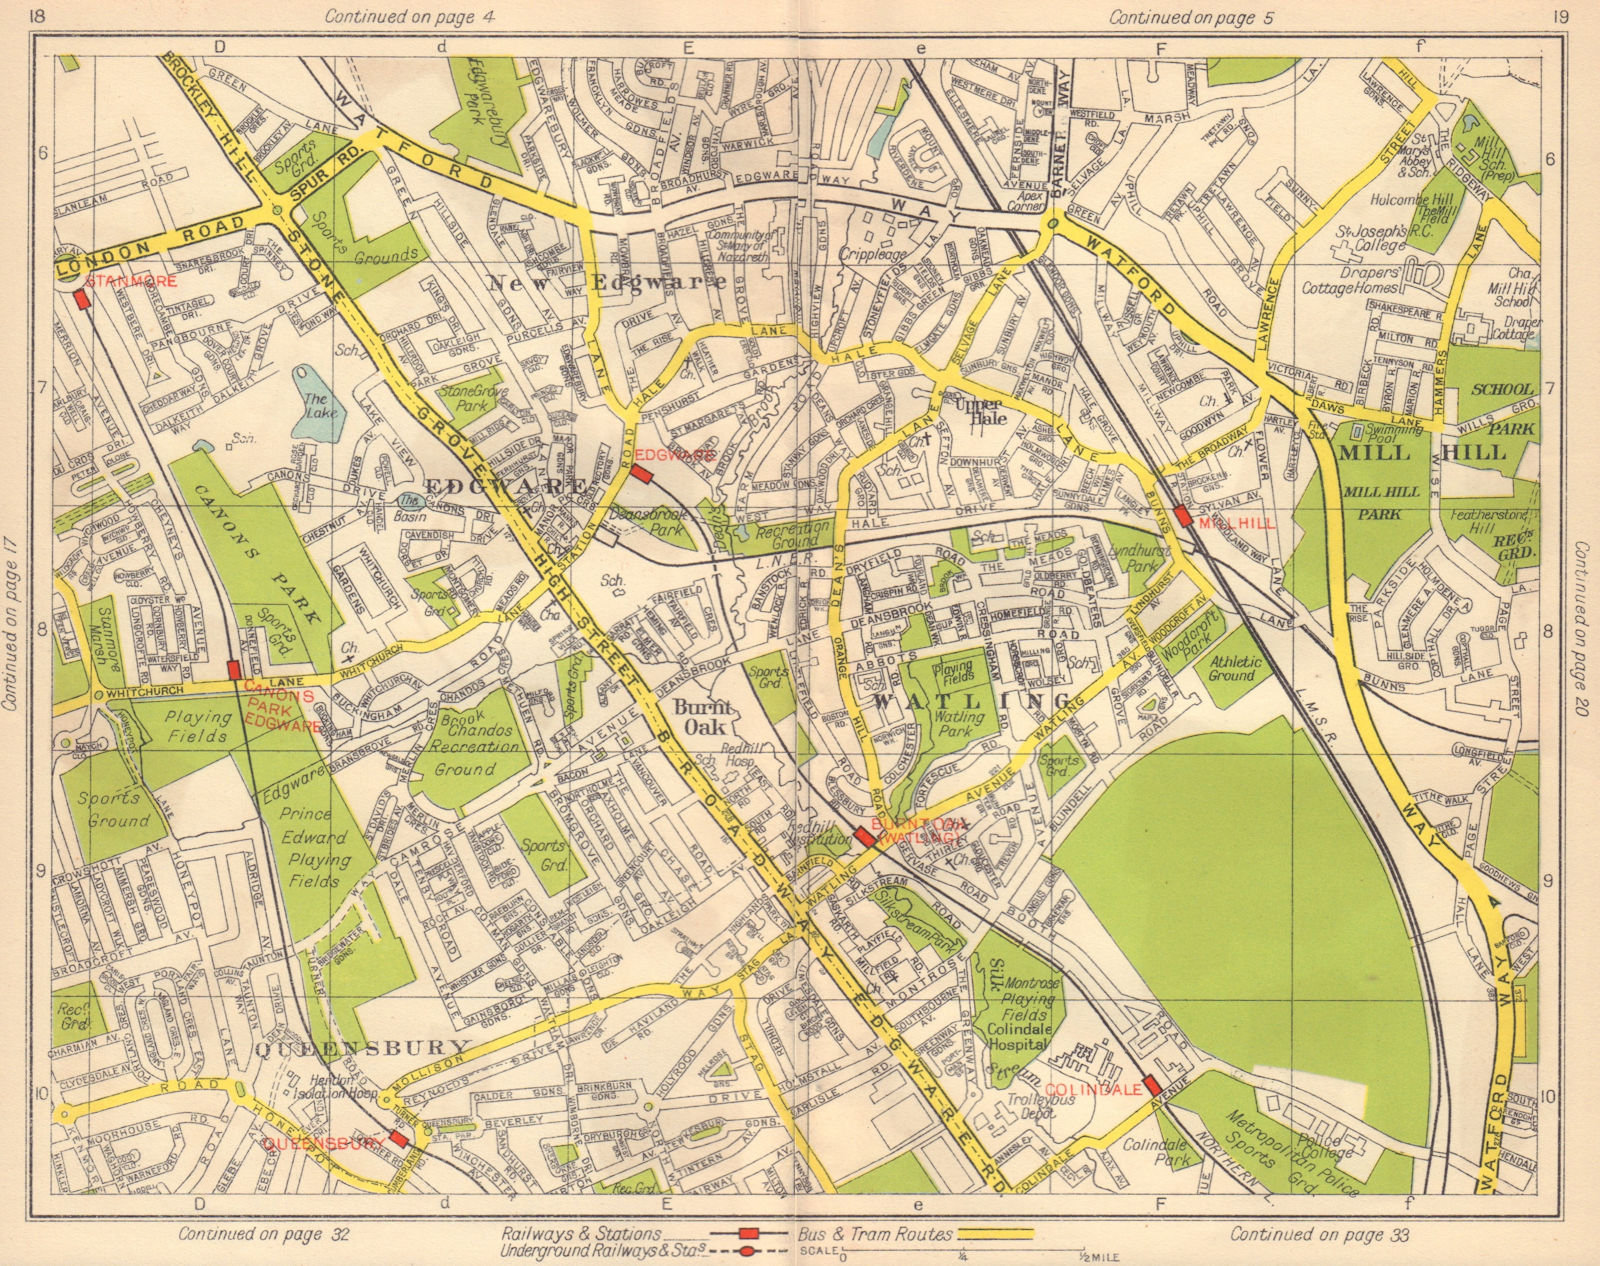 NW LONDON. Edgware Mill Hill Watling Burnt Oak Queensbury Colindale 1948 map